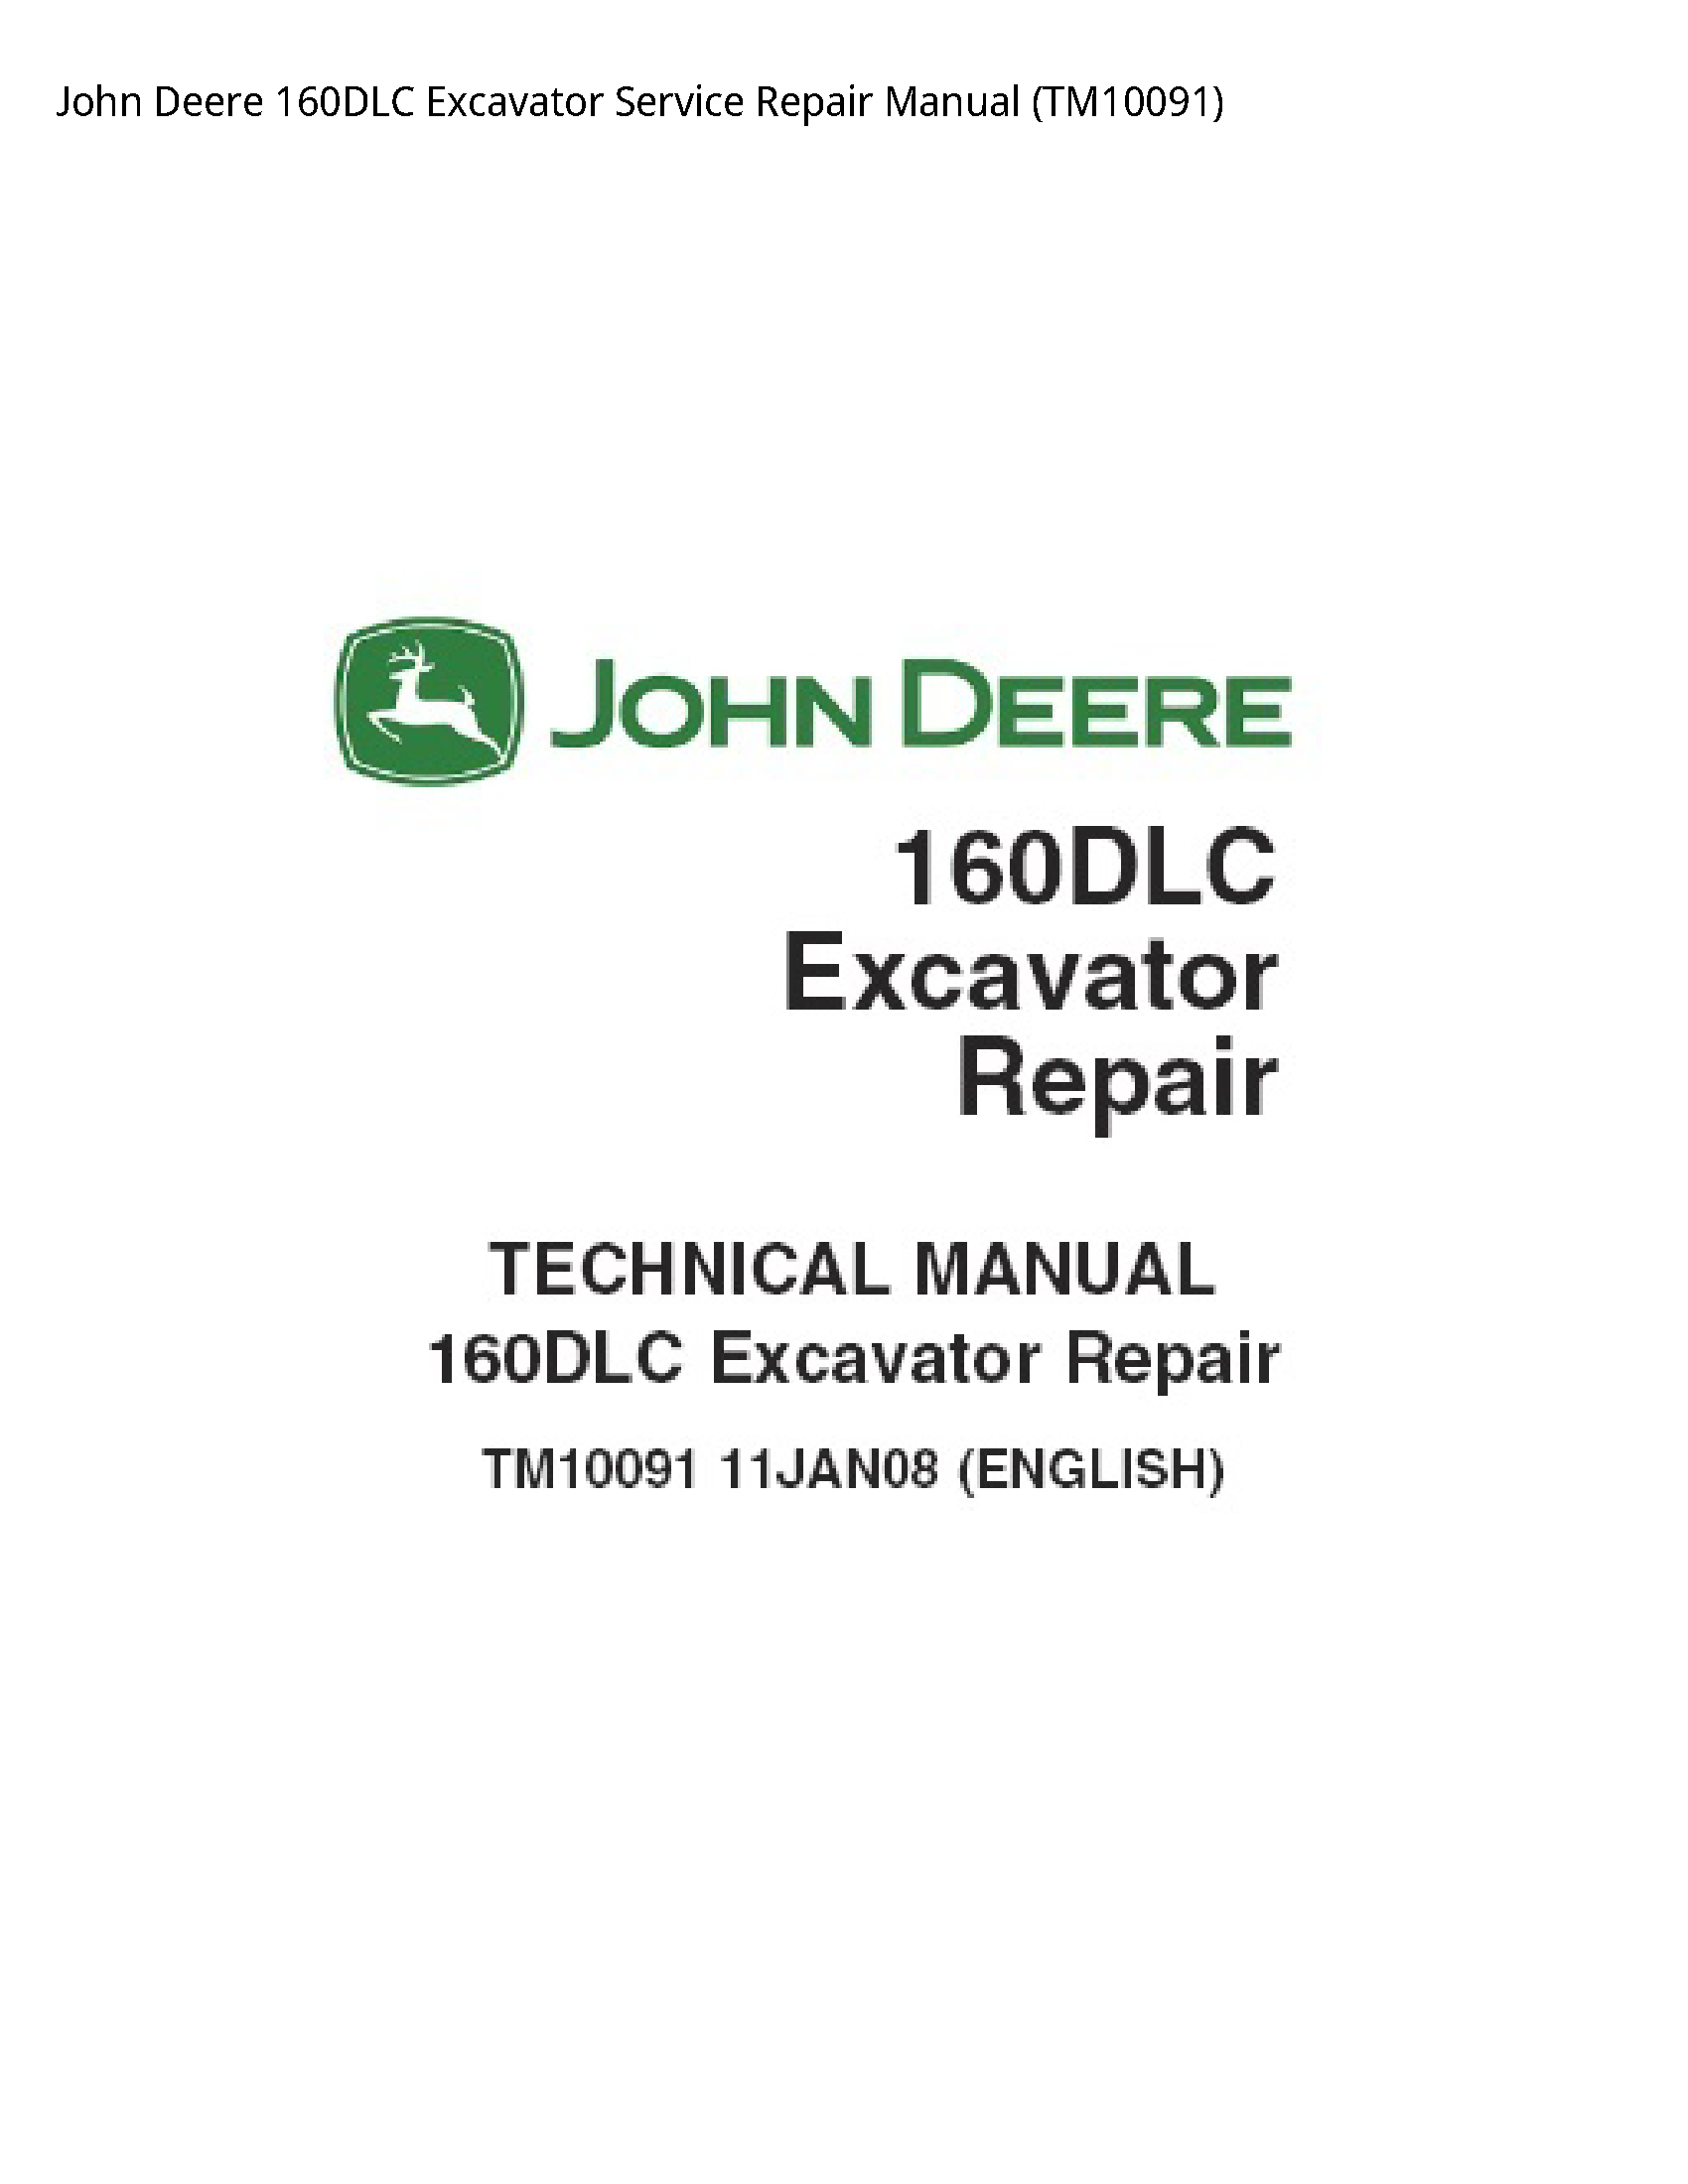 John Deere 160DLC Excavator manual